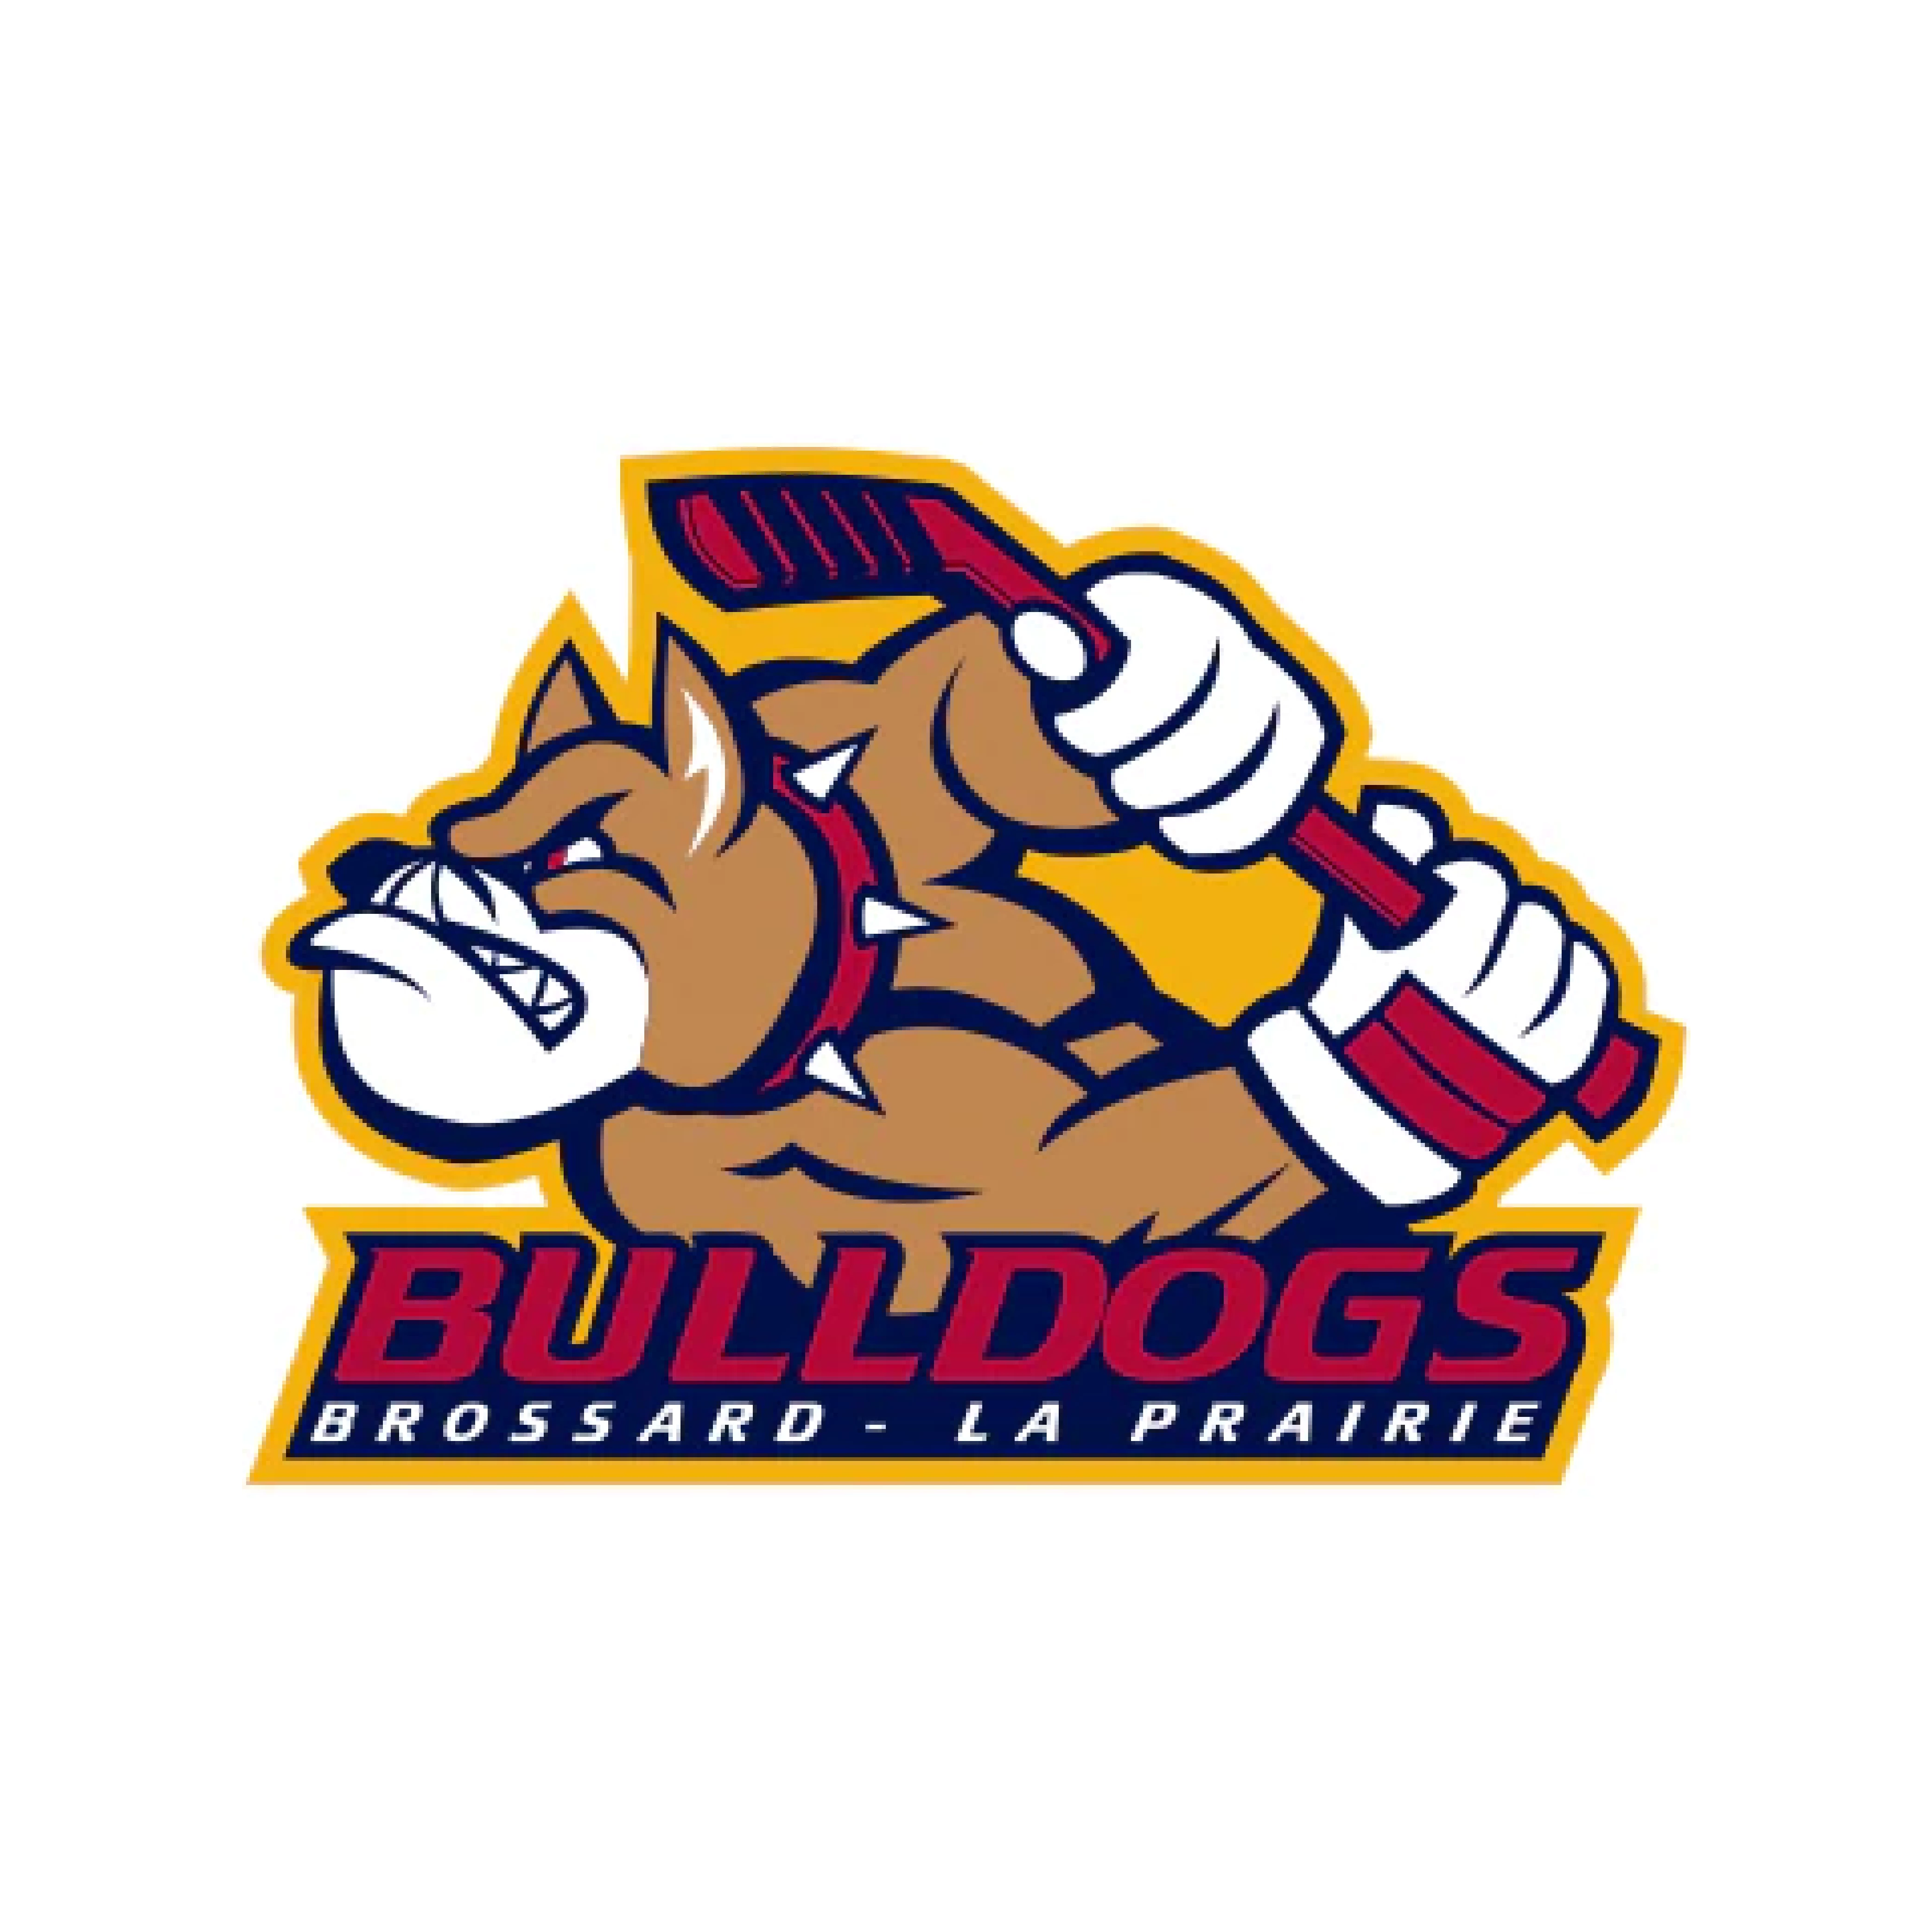 Bulldogs Brossard-LaPrairie